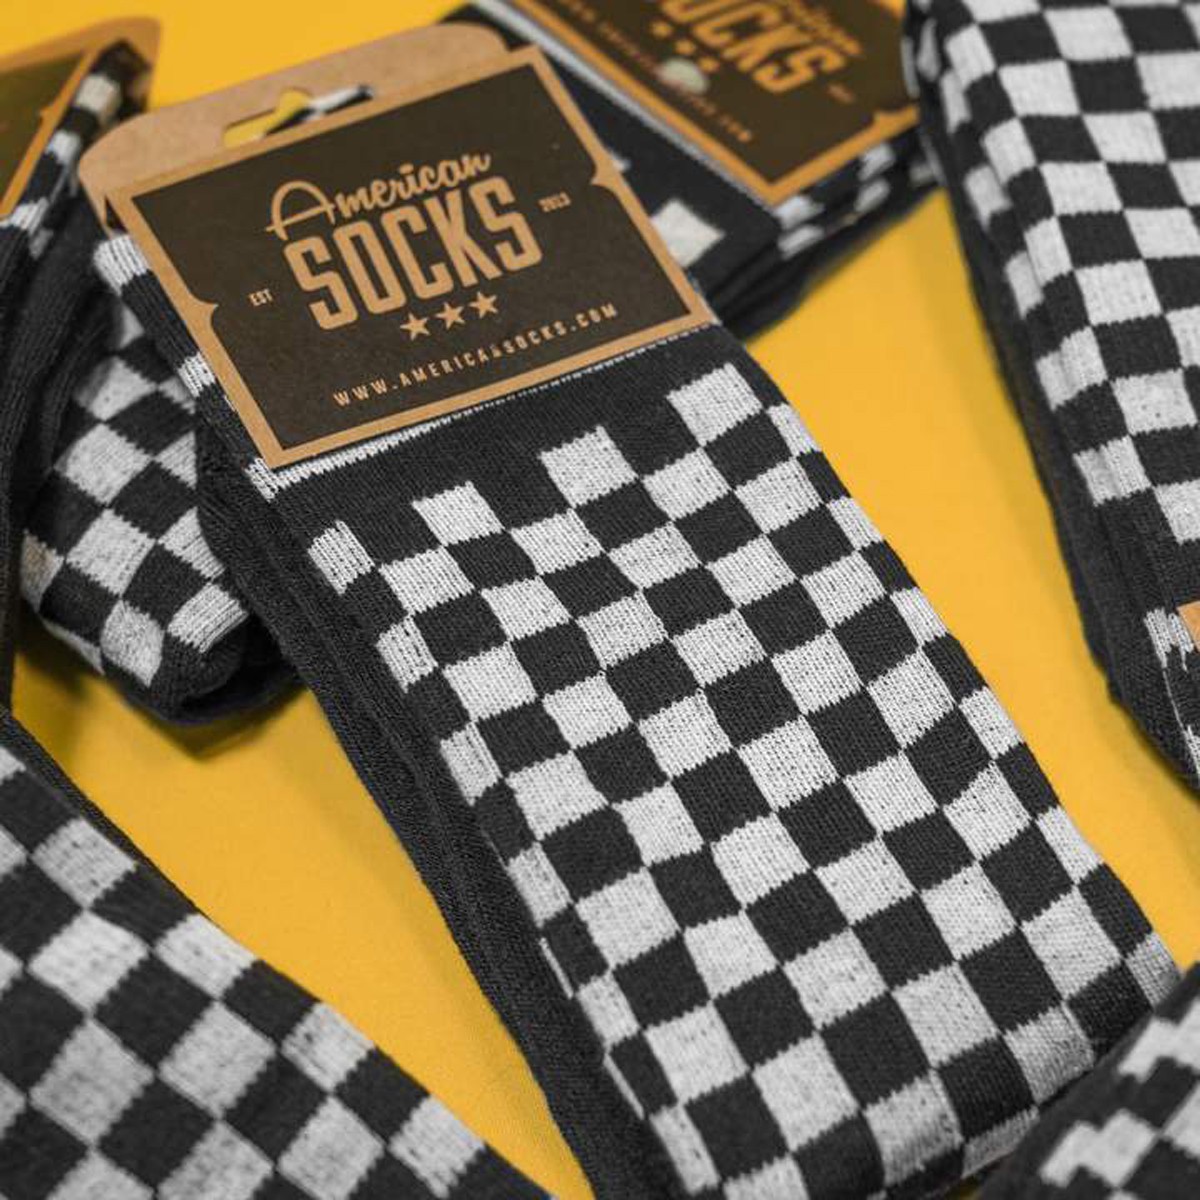 American Socks Checkerboard Mid High Çorap AS141